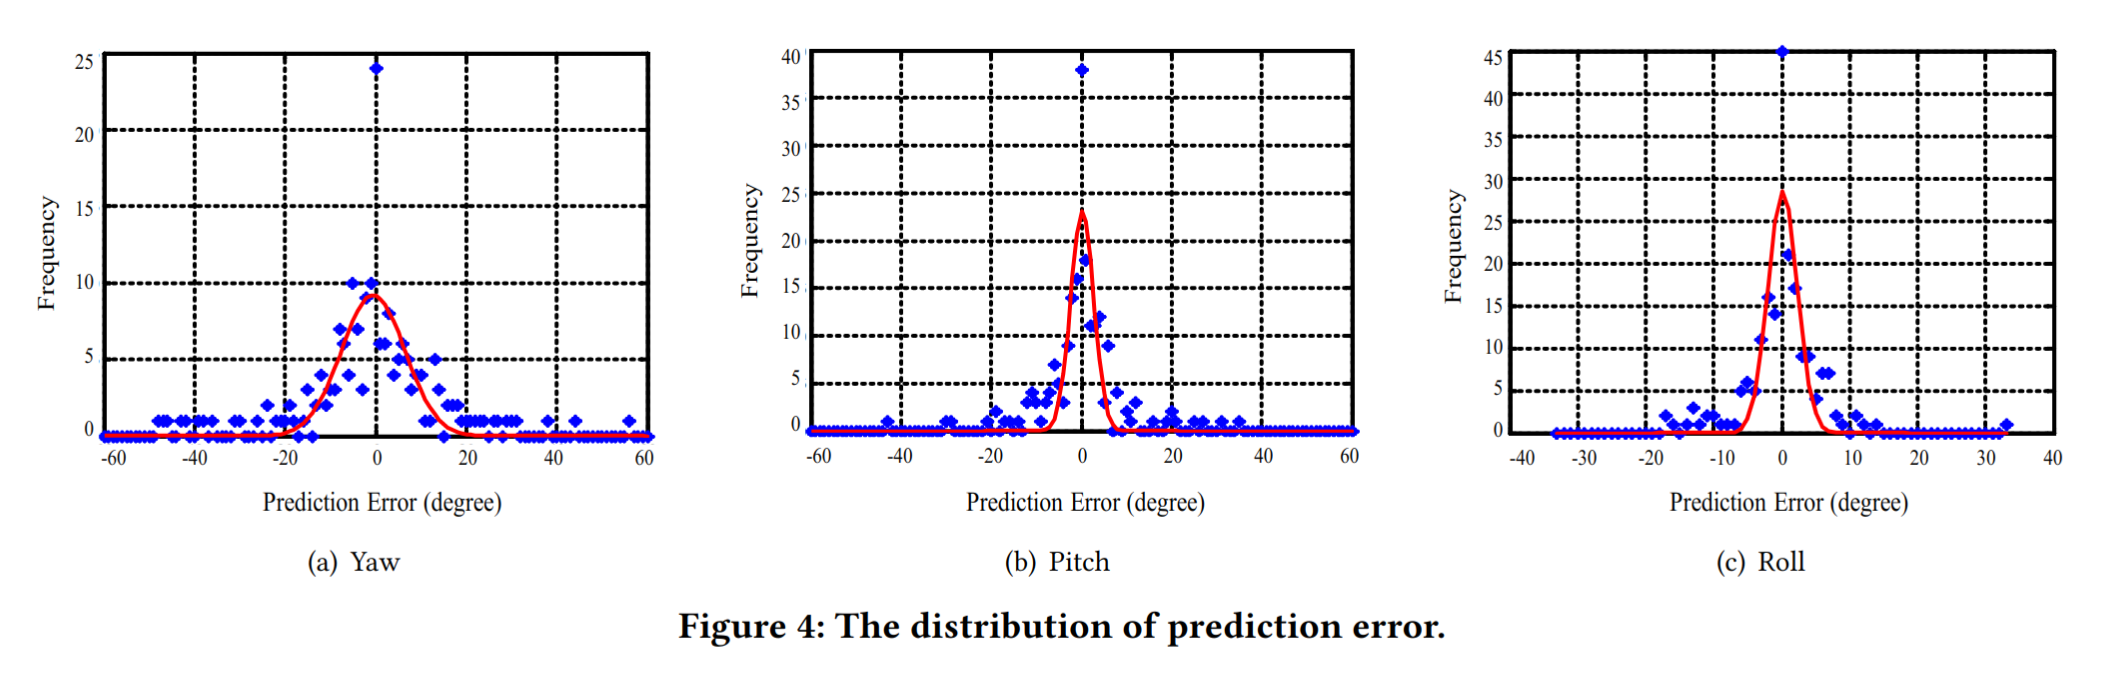 Distribution of prediction error